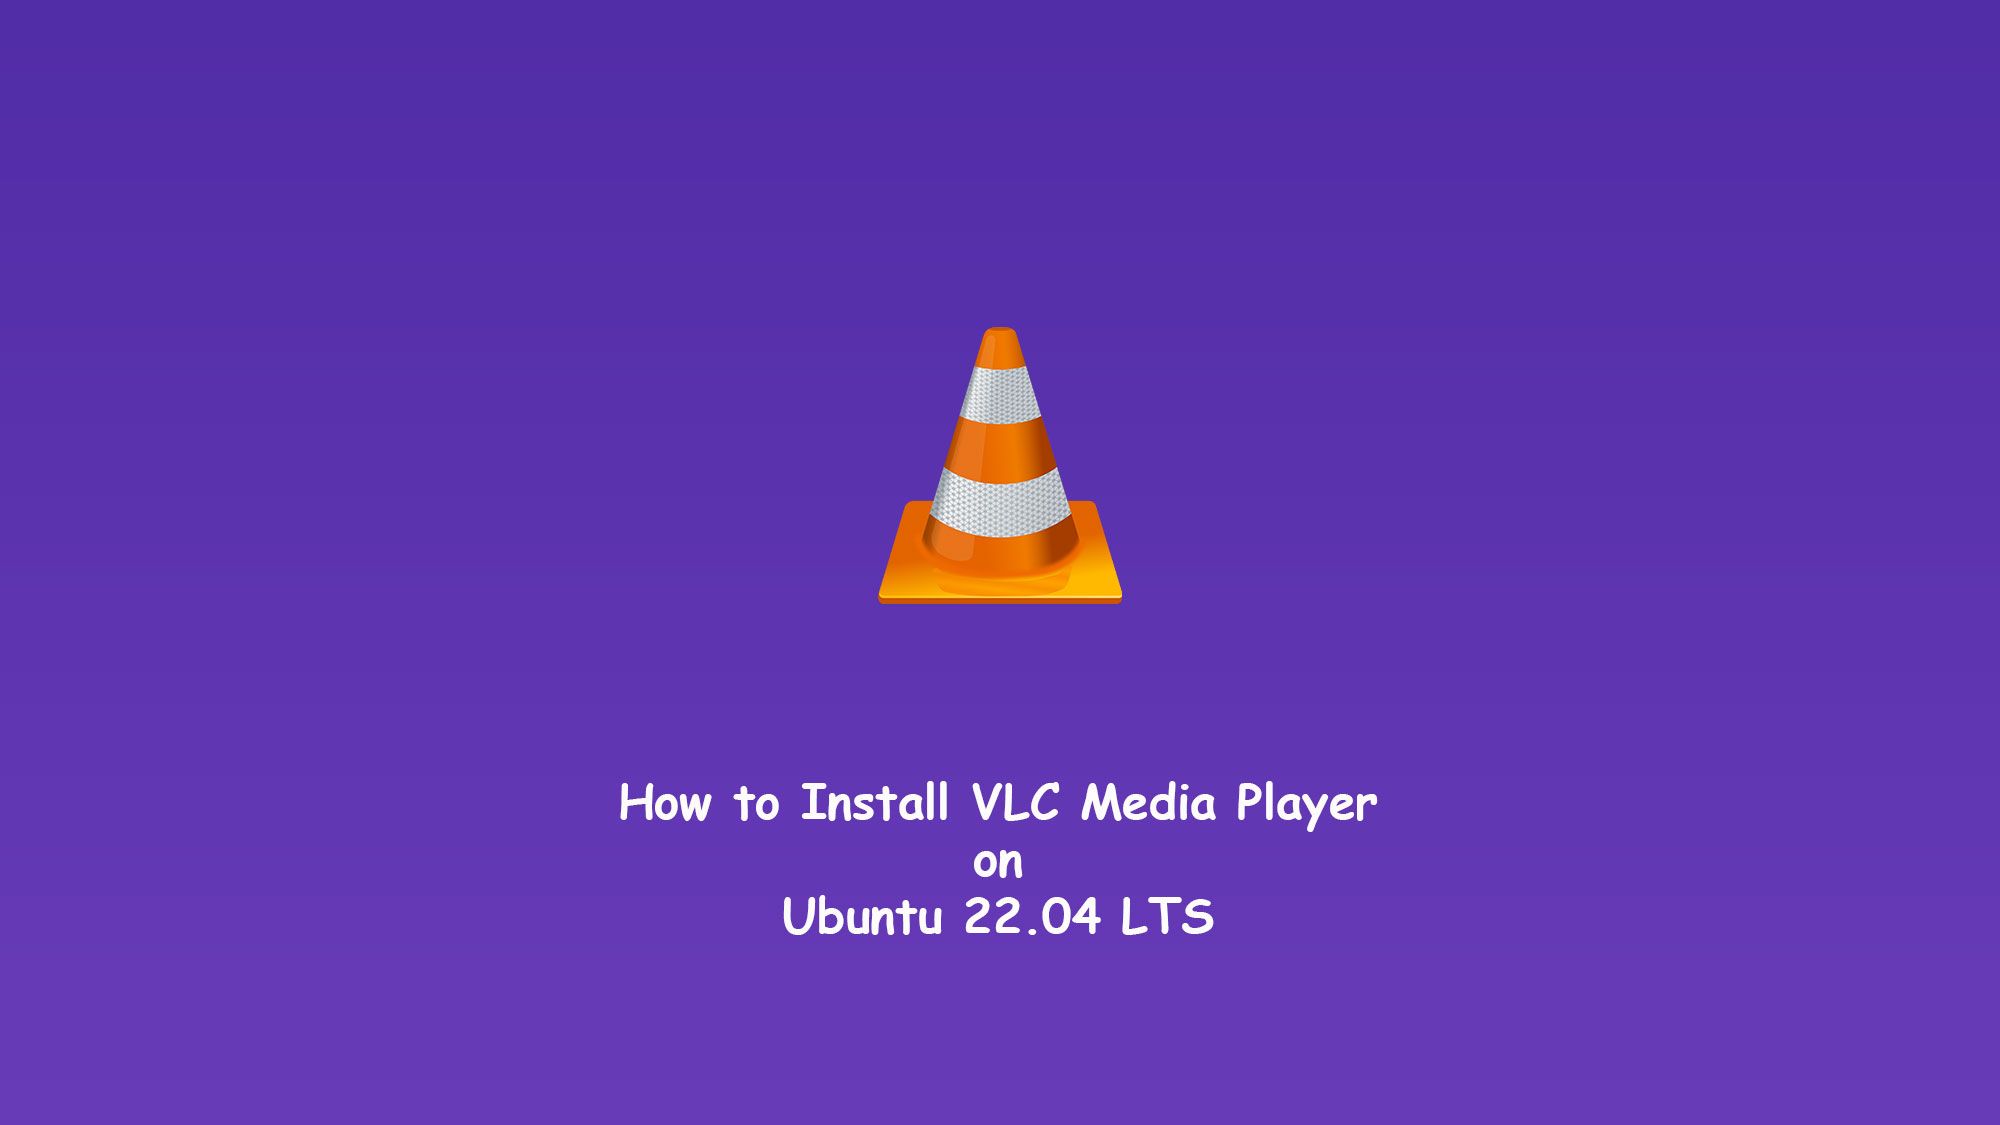 Install VLC on Ubuntu 22.04